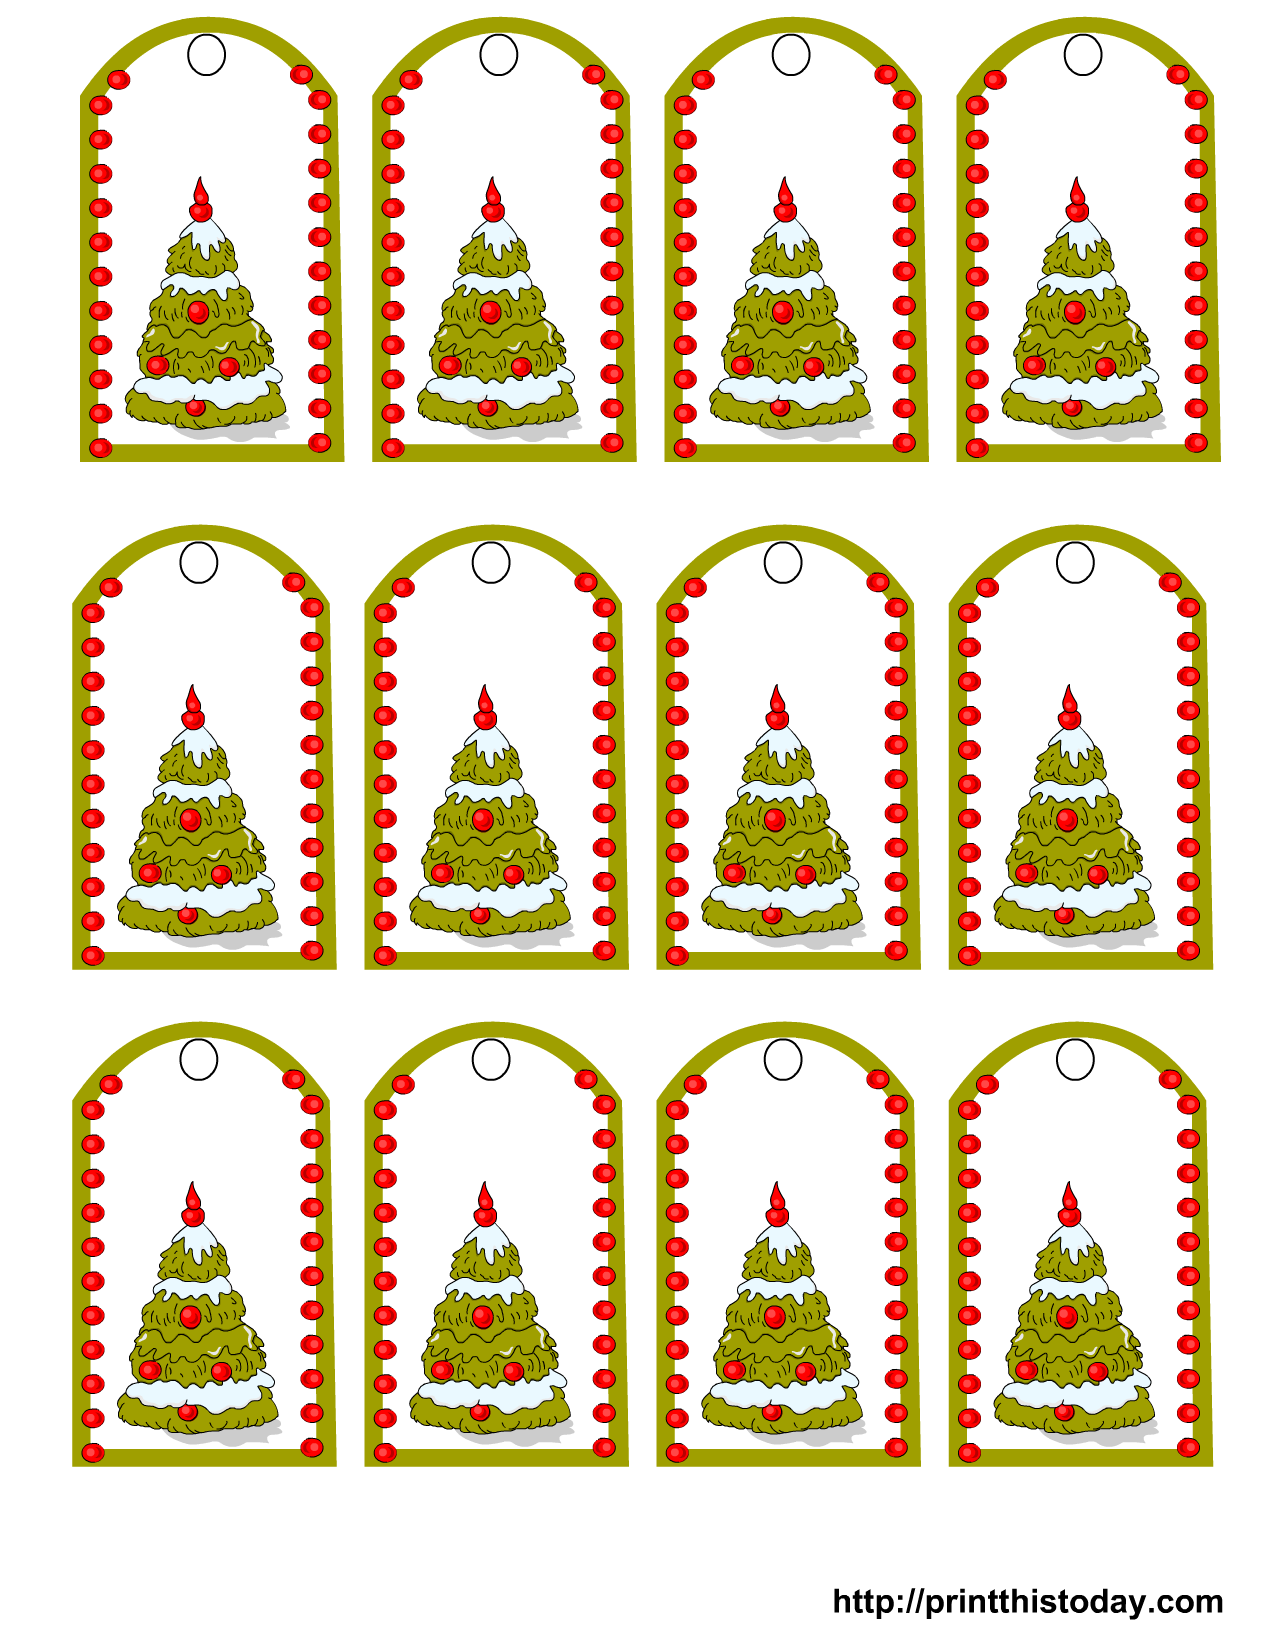 Free Printable Christmas Gift Tags featuring Christmas Tree